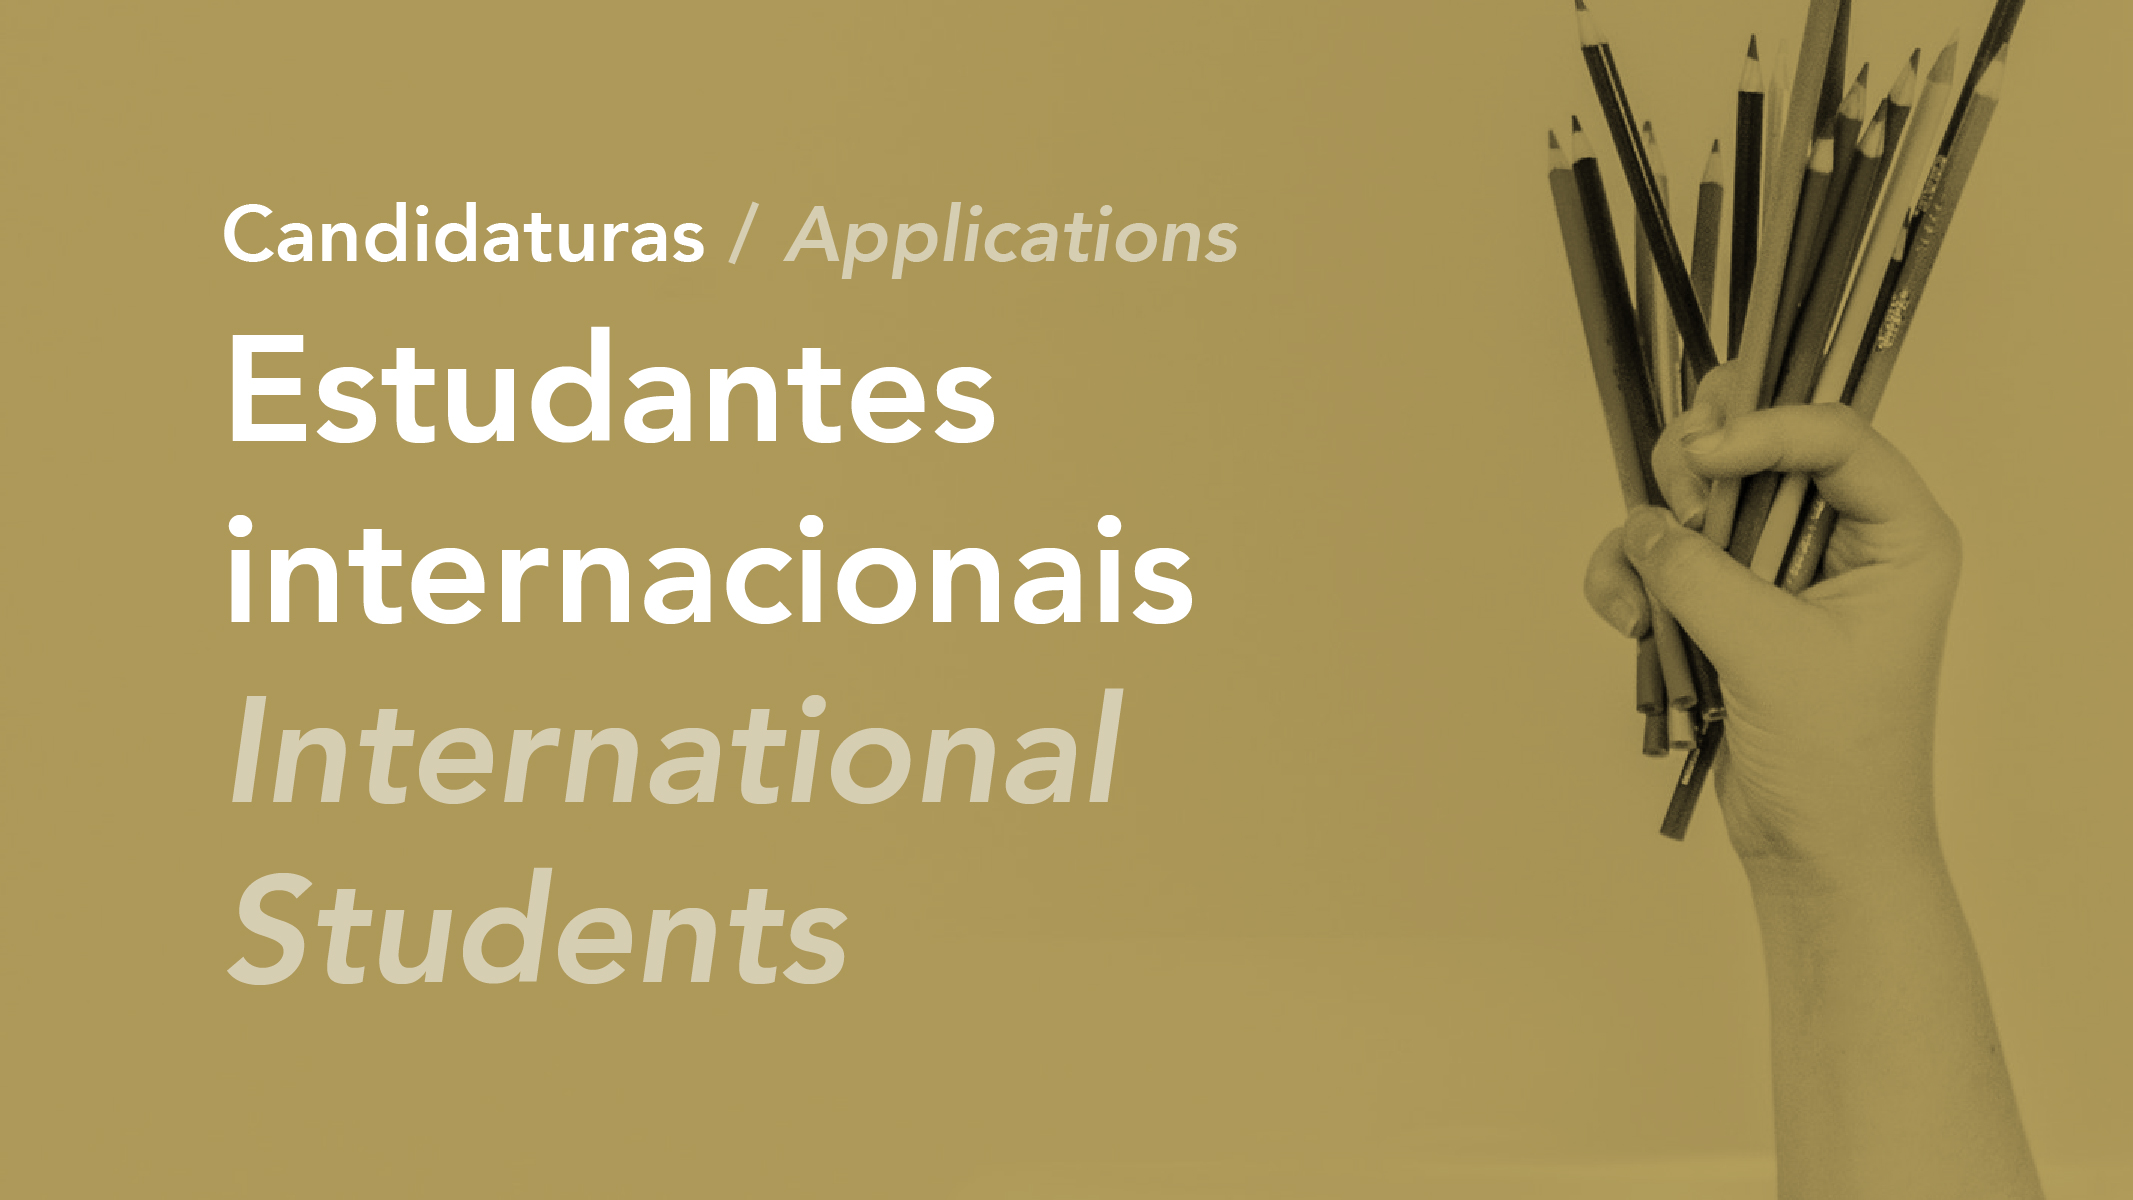 Applications for International Students / Candidaturas para estudantes internacionais